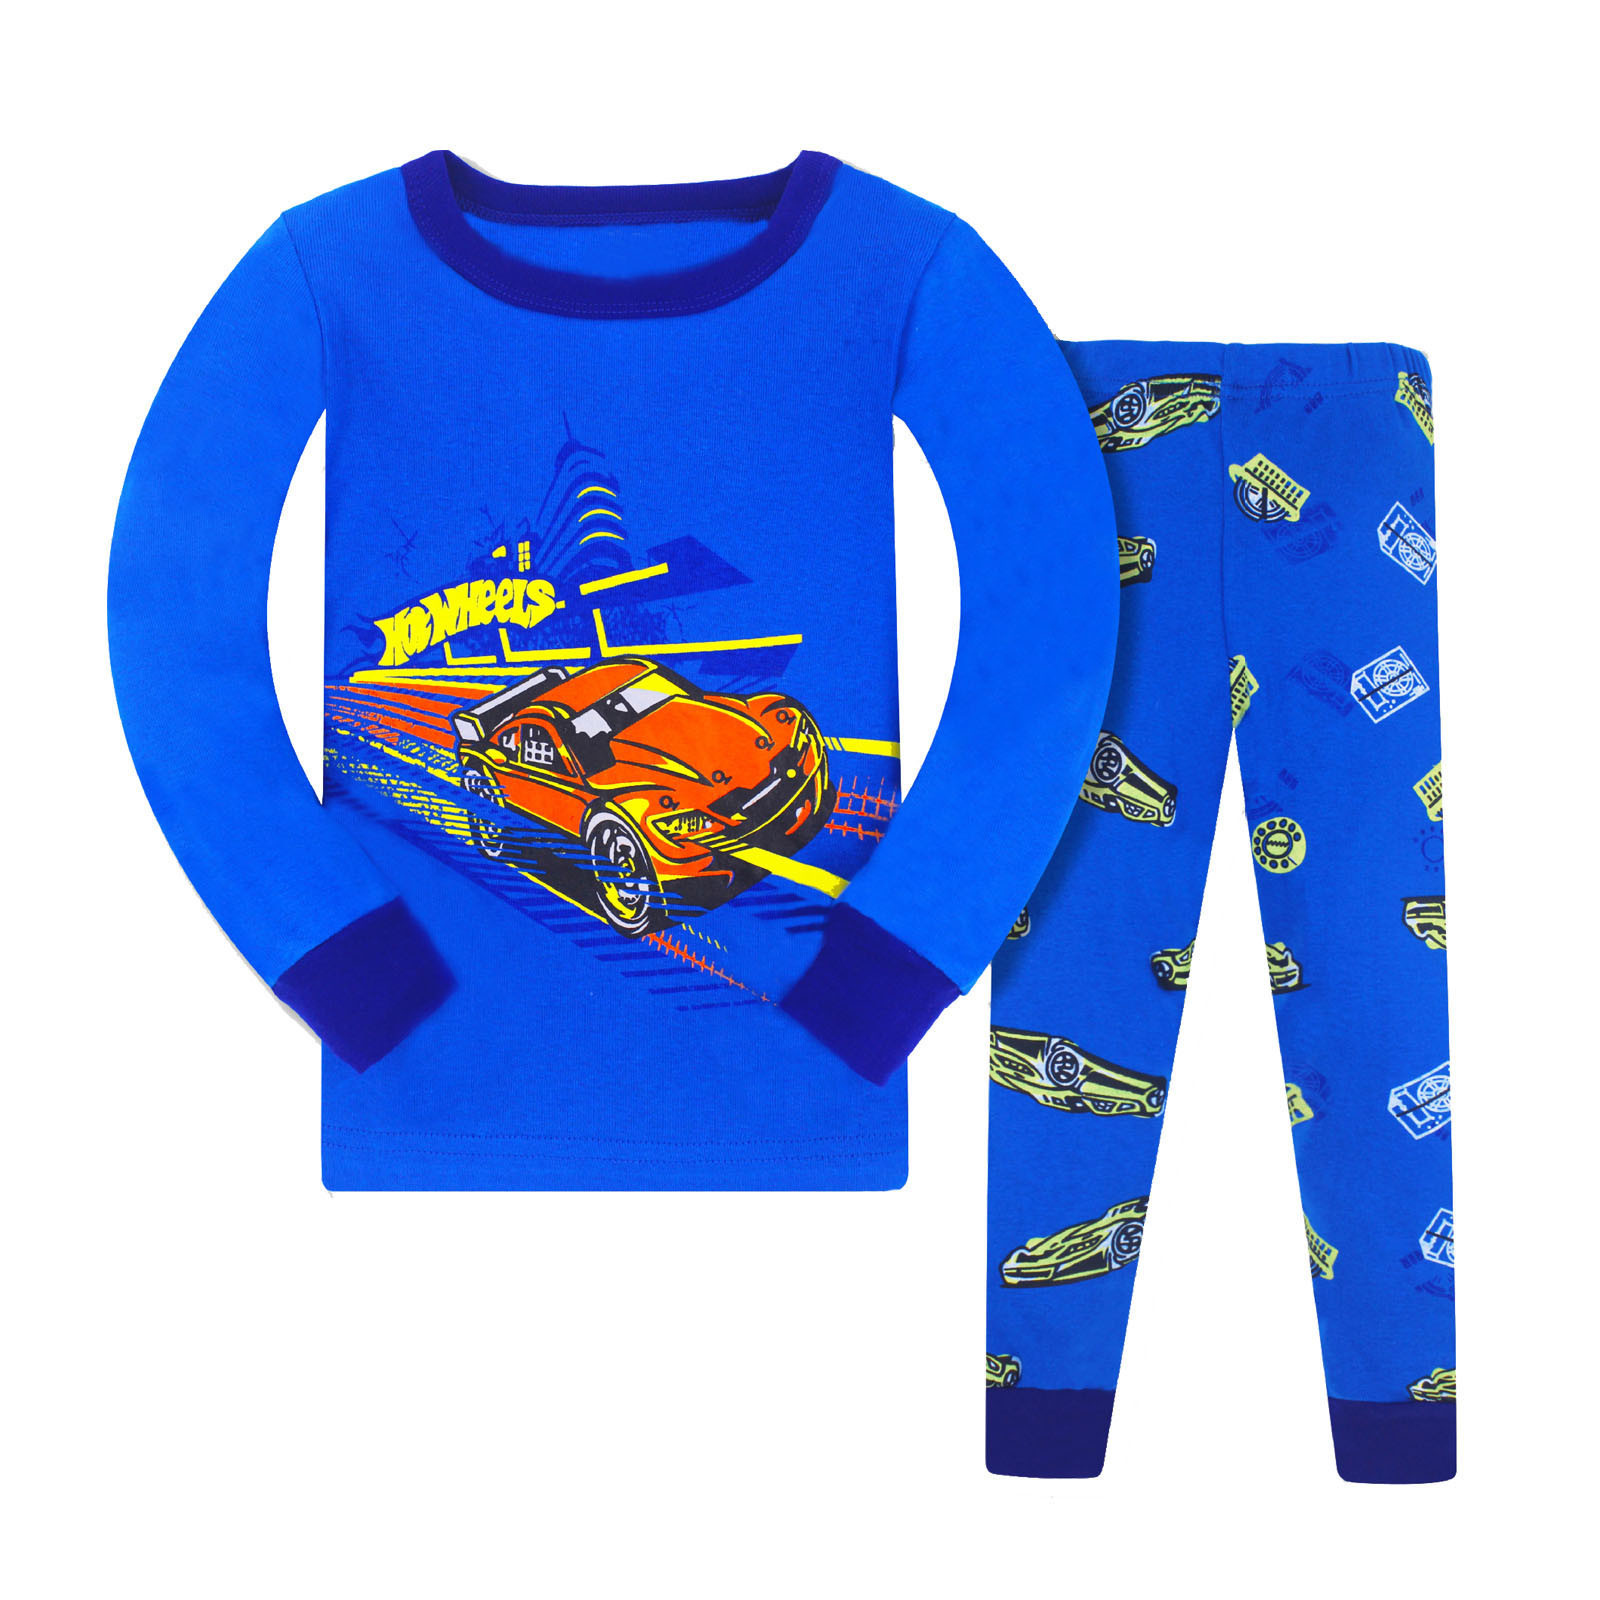 Toddler Boys Outfit Sets Cotton Sleepwear Pajama Set Cars Cartoon Print ...